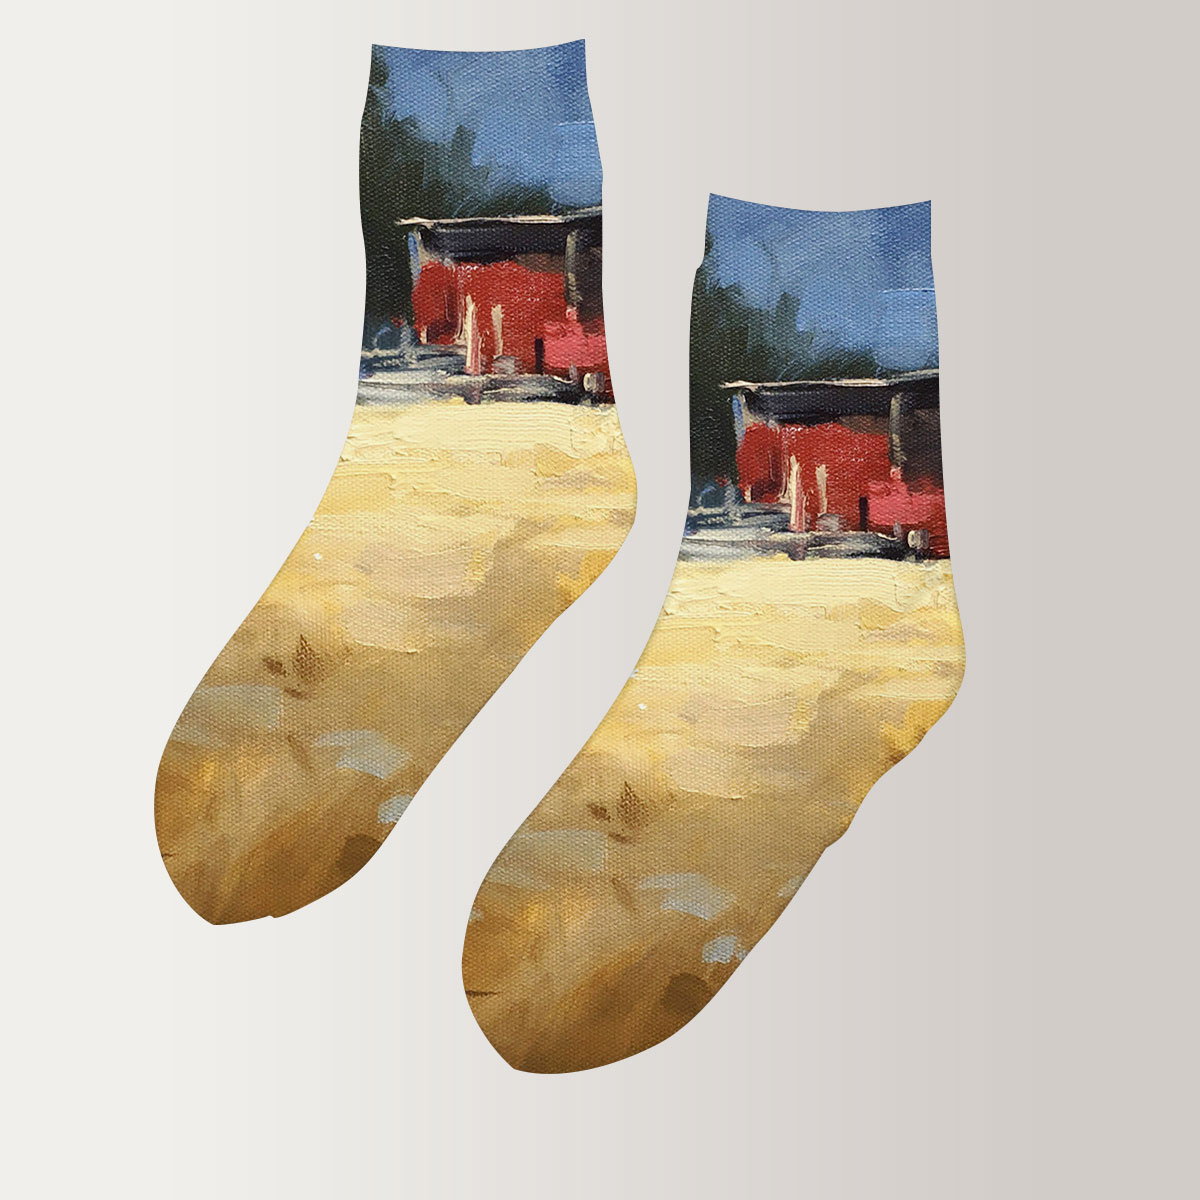 Rustic Farm 3D Socks